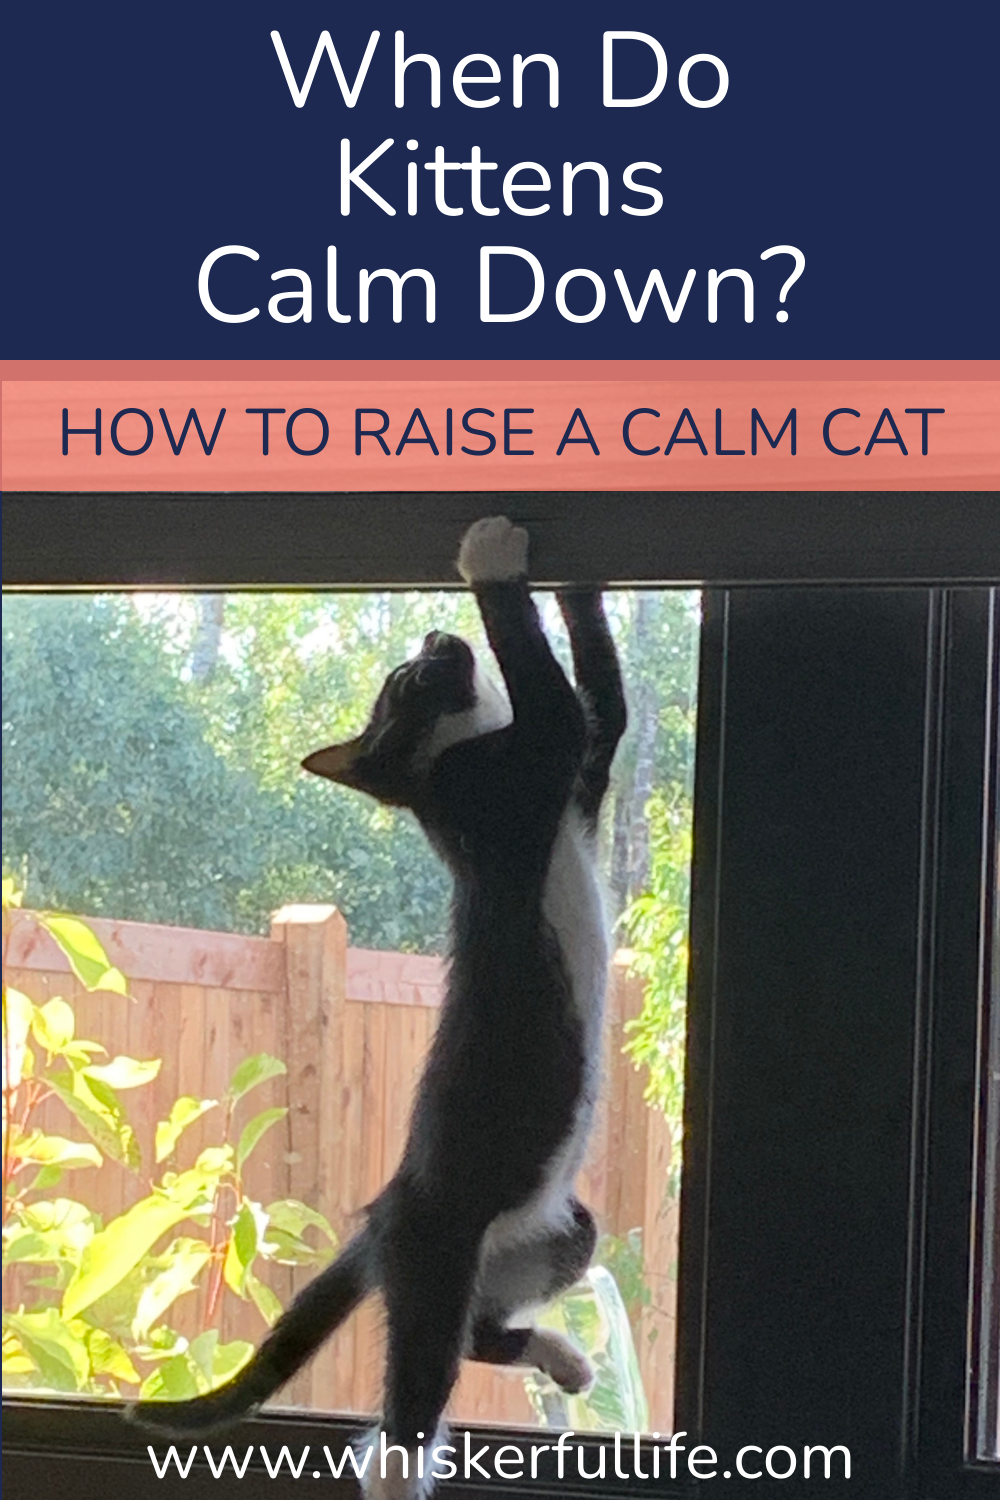 When do Kittens Calm Down?